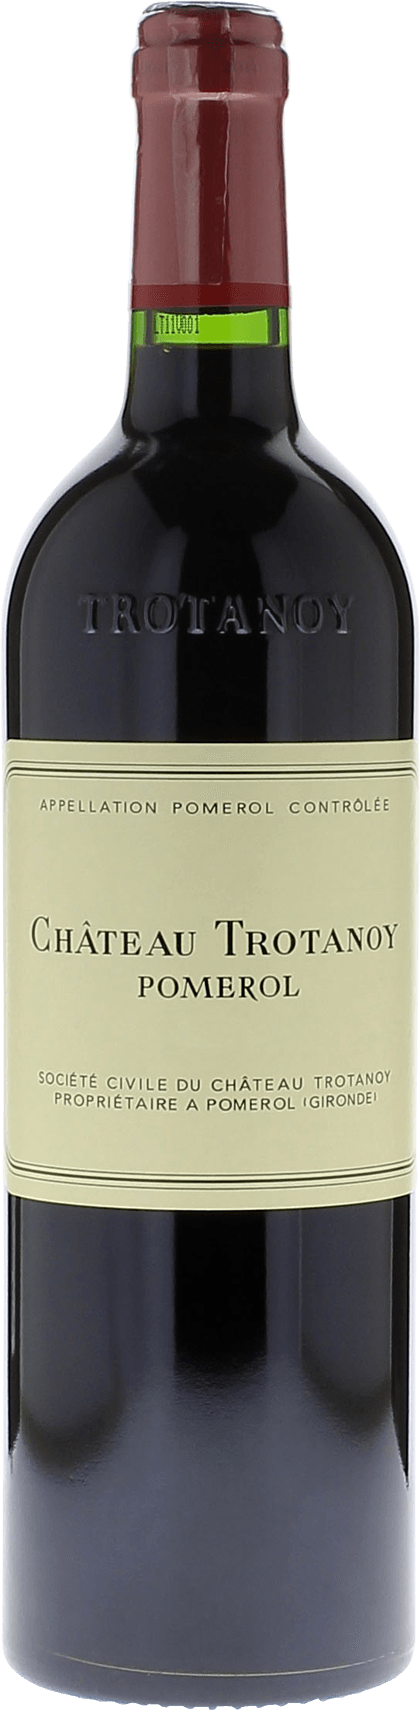 Trotanoy 1998  Pomerol, Bordeaux rouge